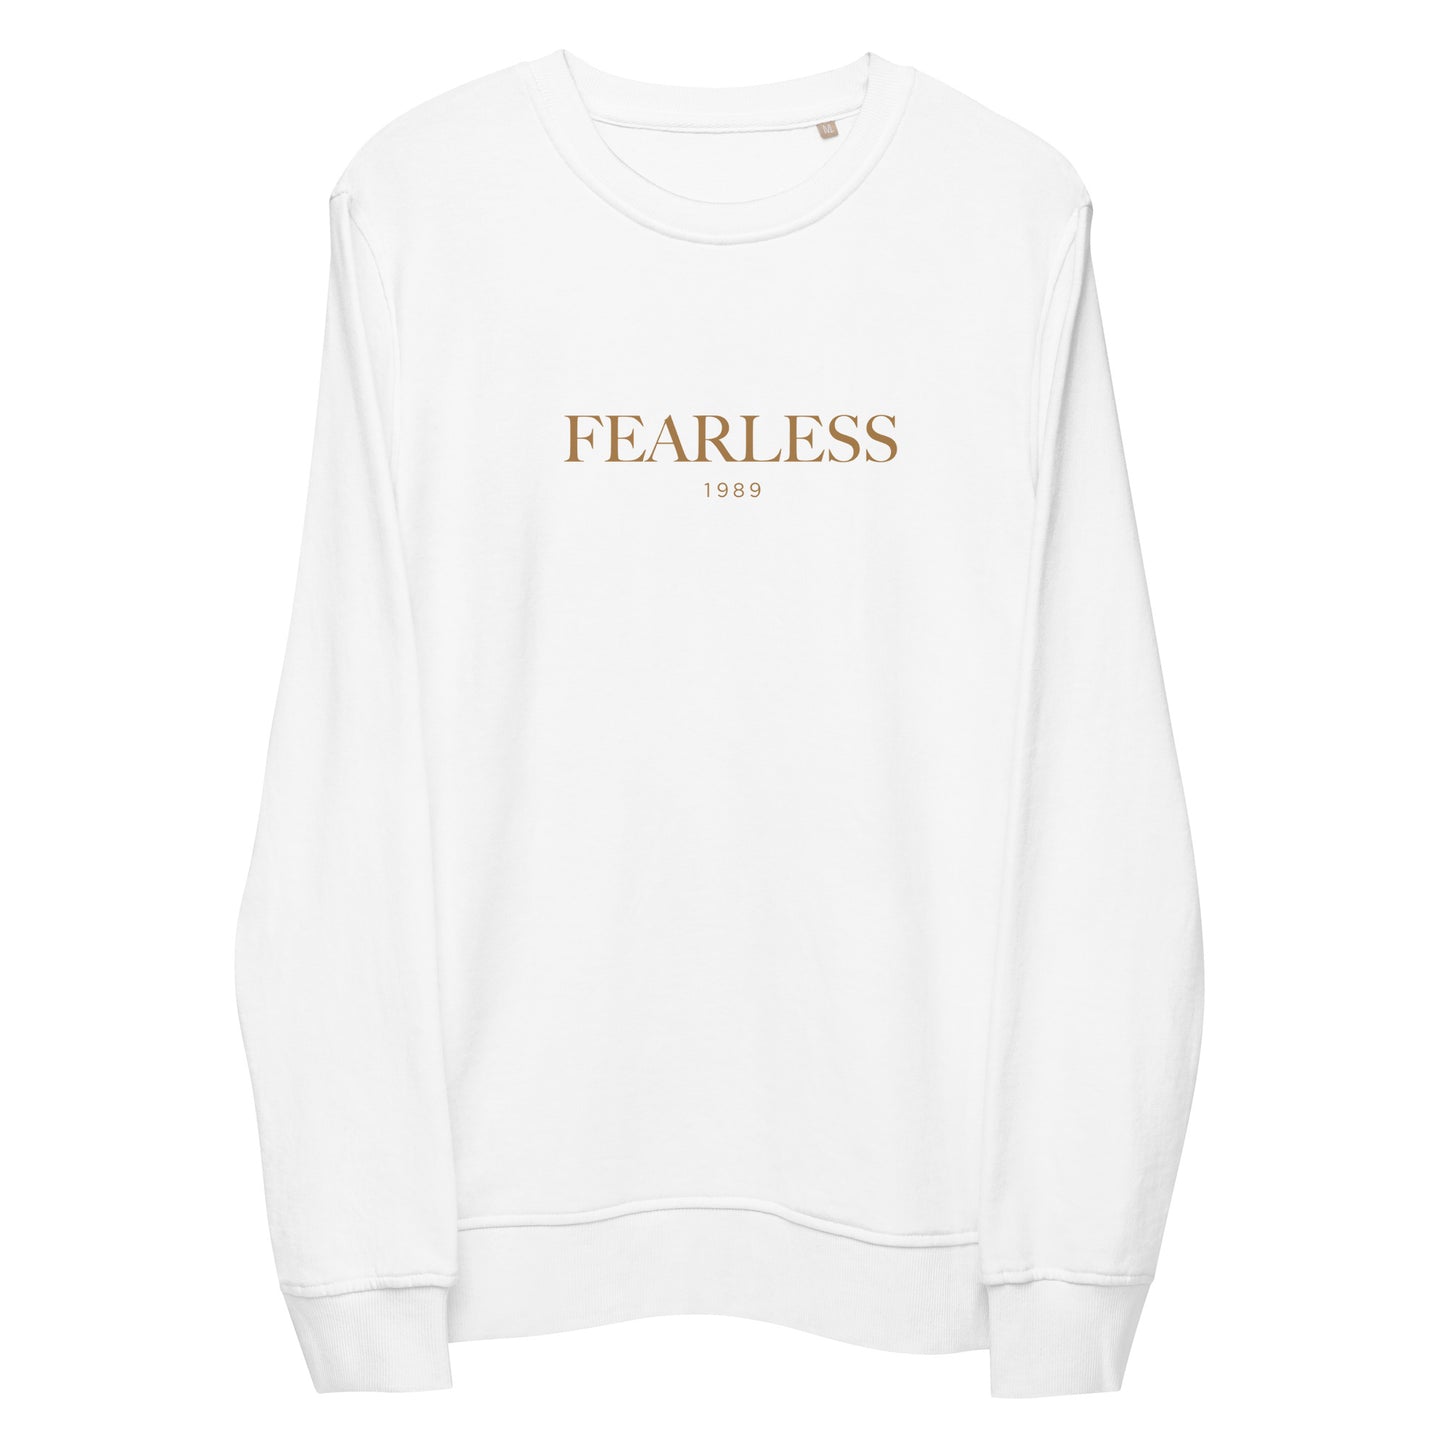 Fearless 1989 Women's Organic Cotton Sweatshirt